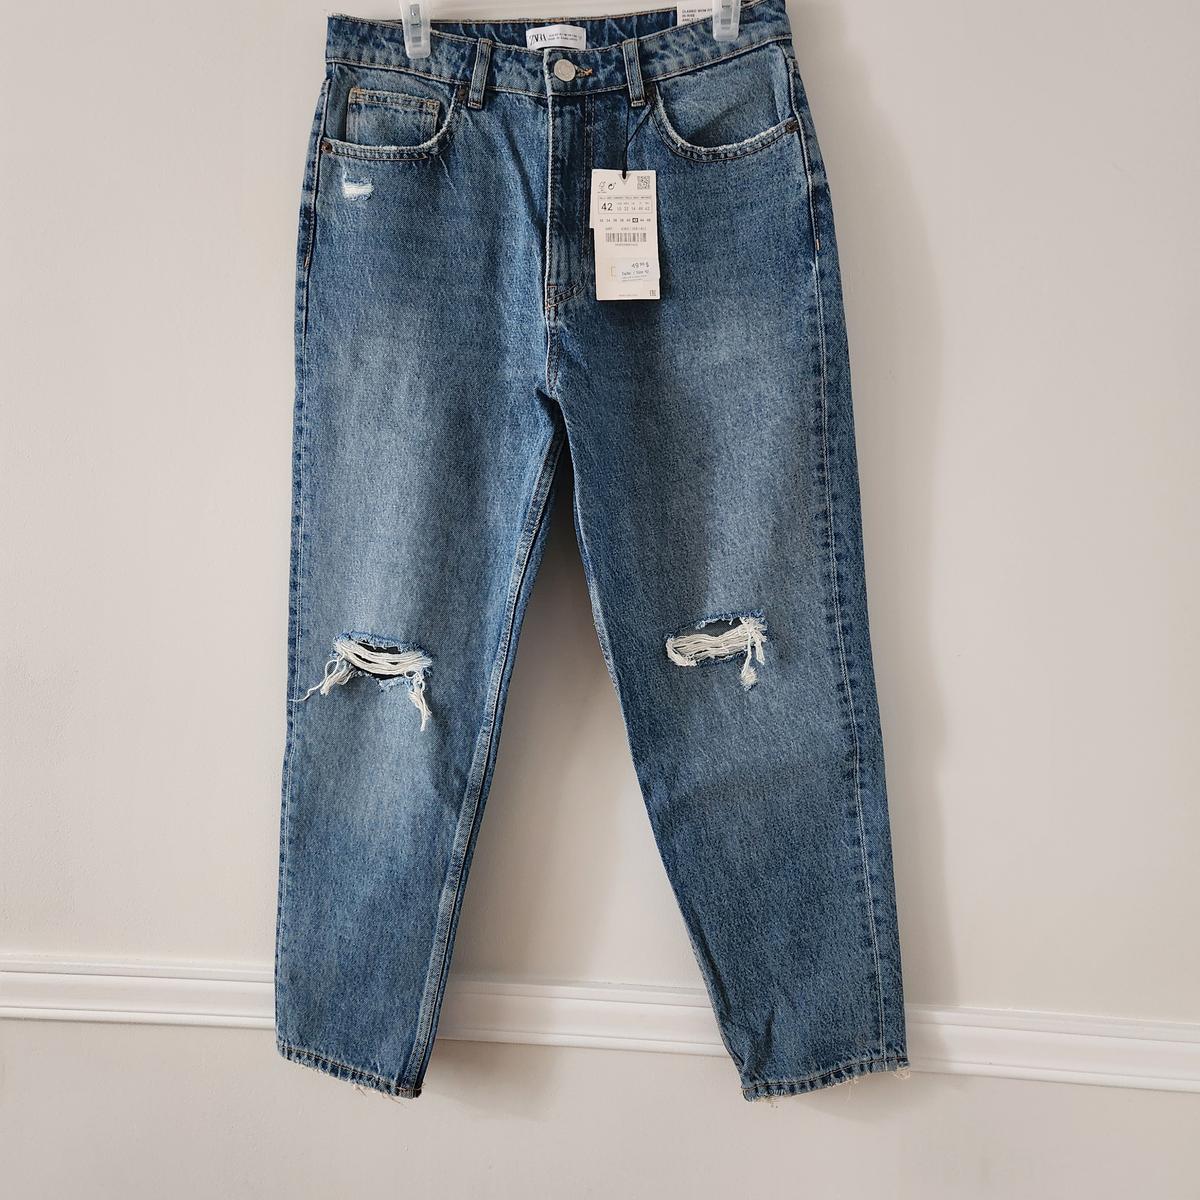 Photo of Mom jeans Zara 42 EUR/10 US